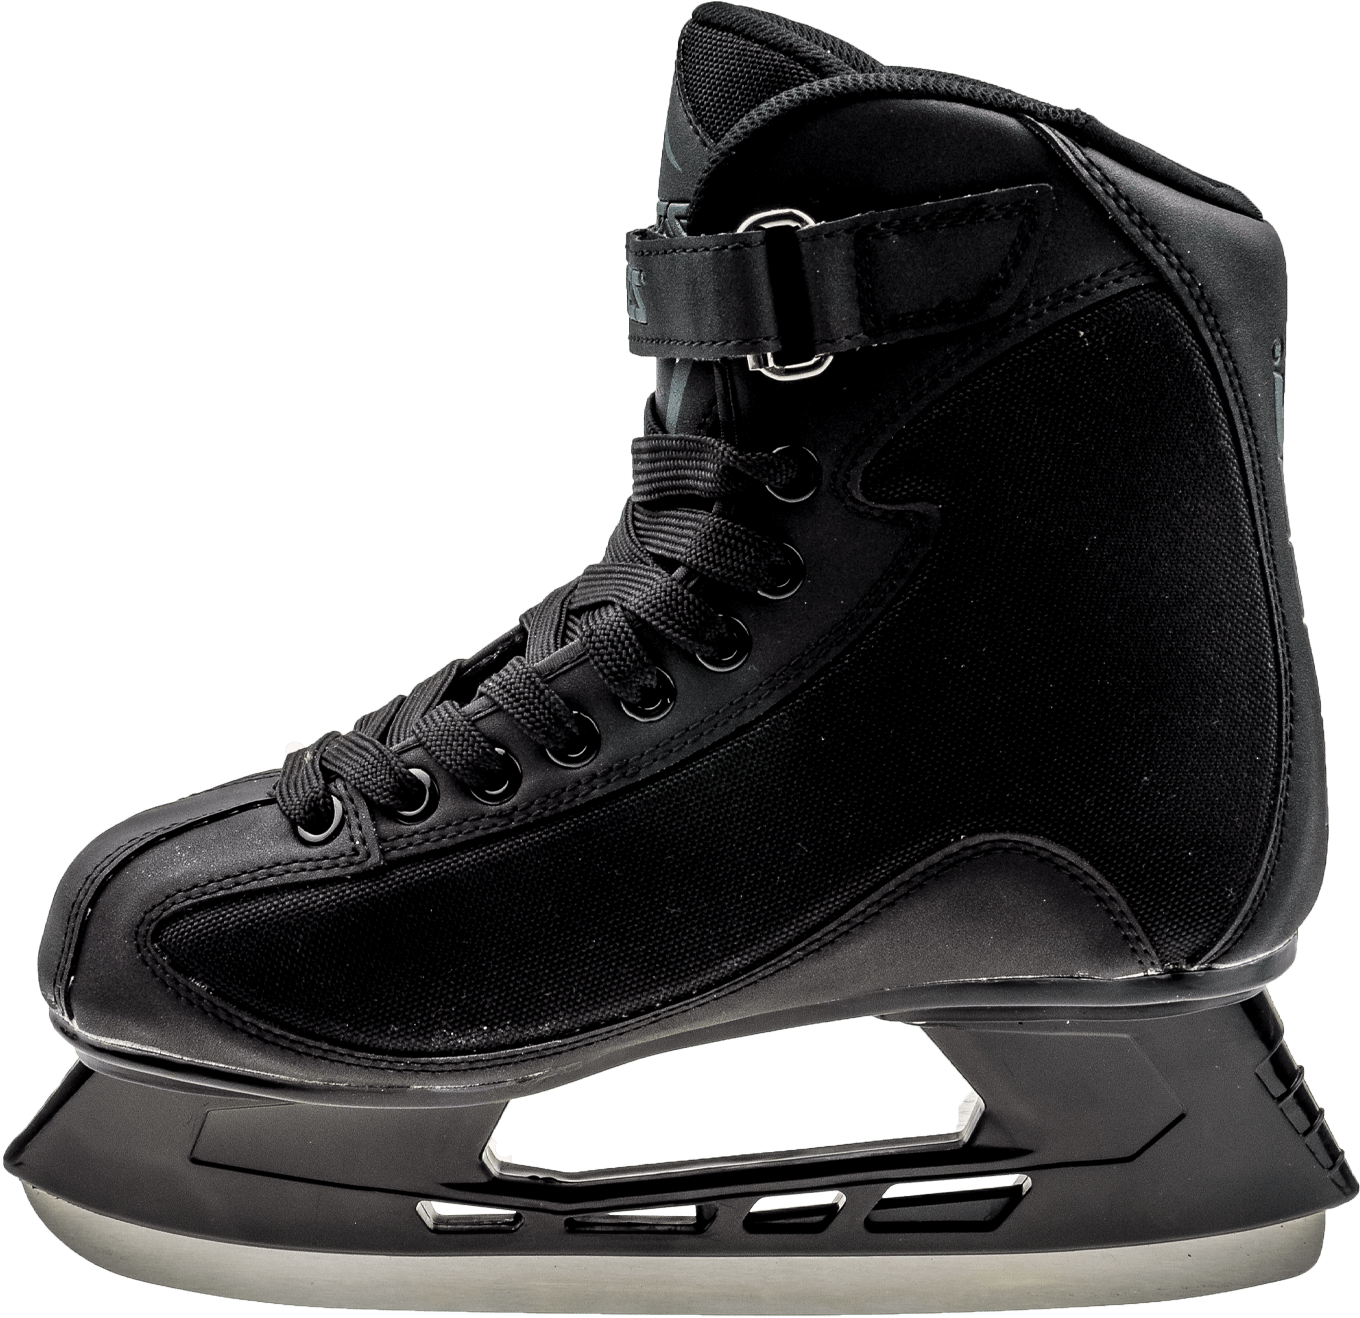 Rocesrsk 2 Ice Hockey Skate [black] - Roces Rsk 2 Sale (2400x1350), Png Download